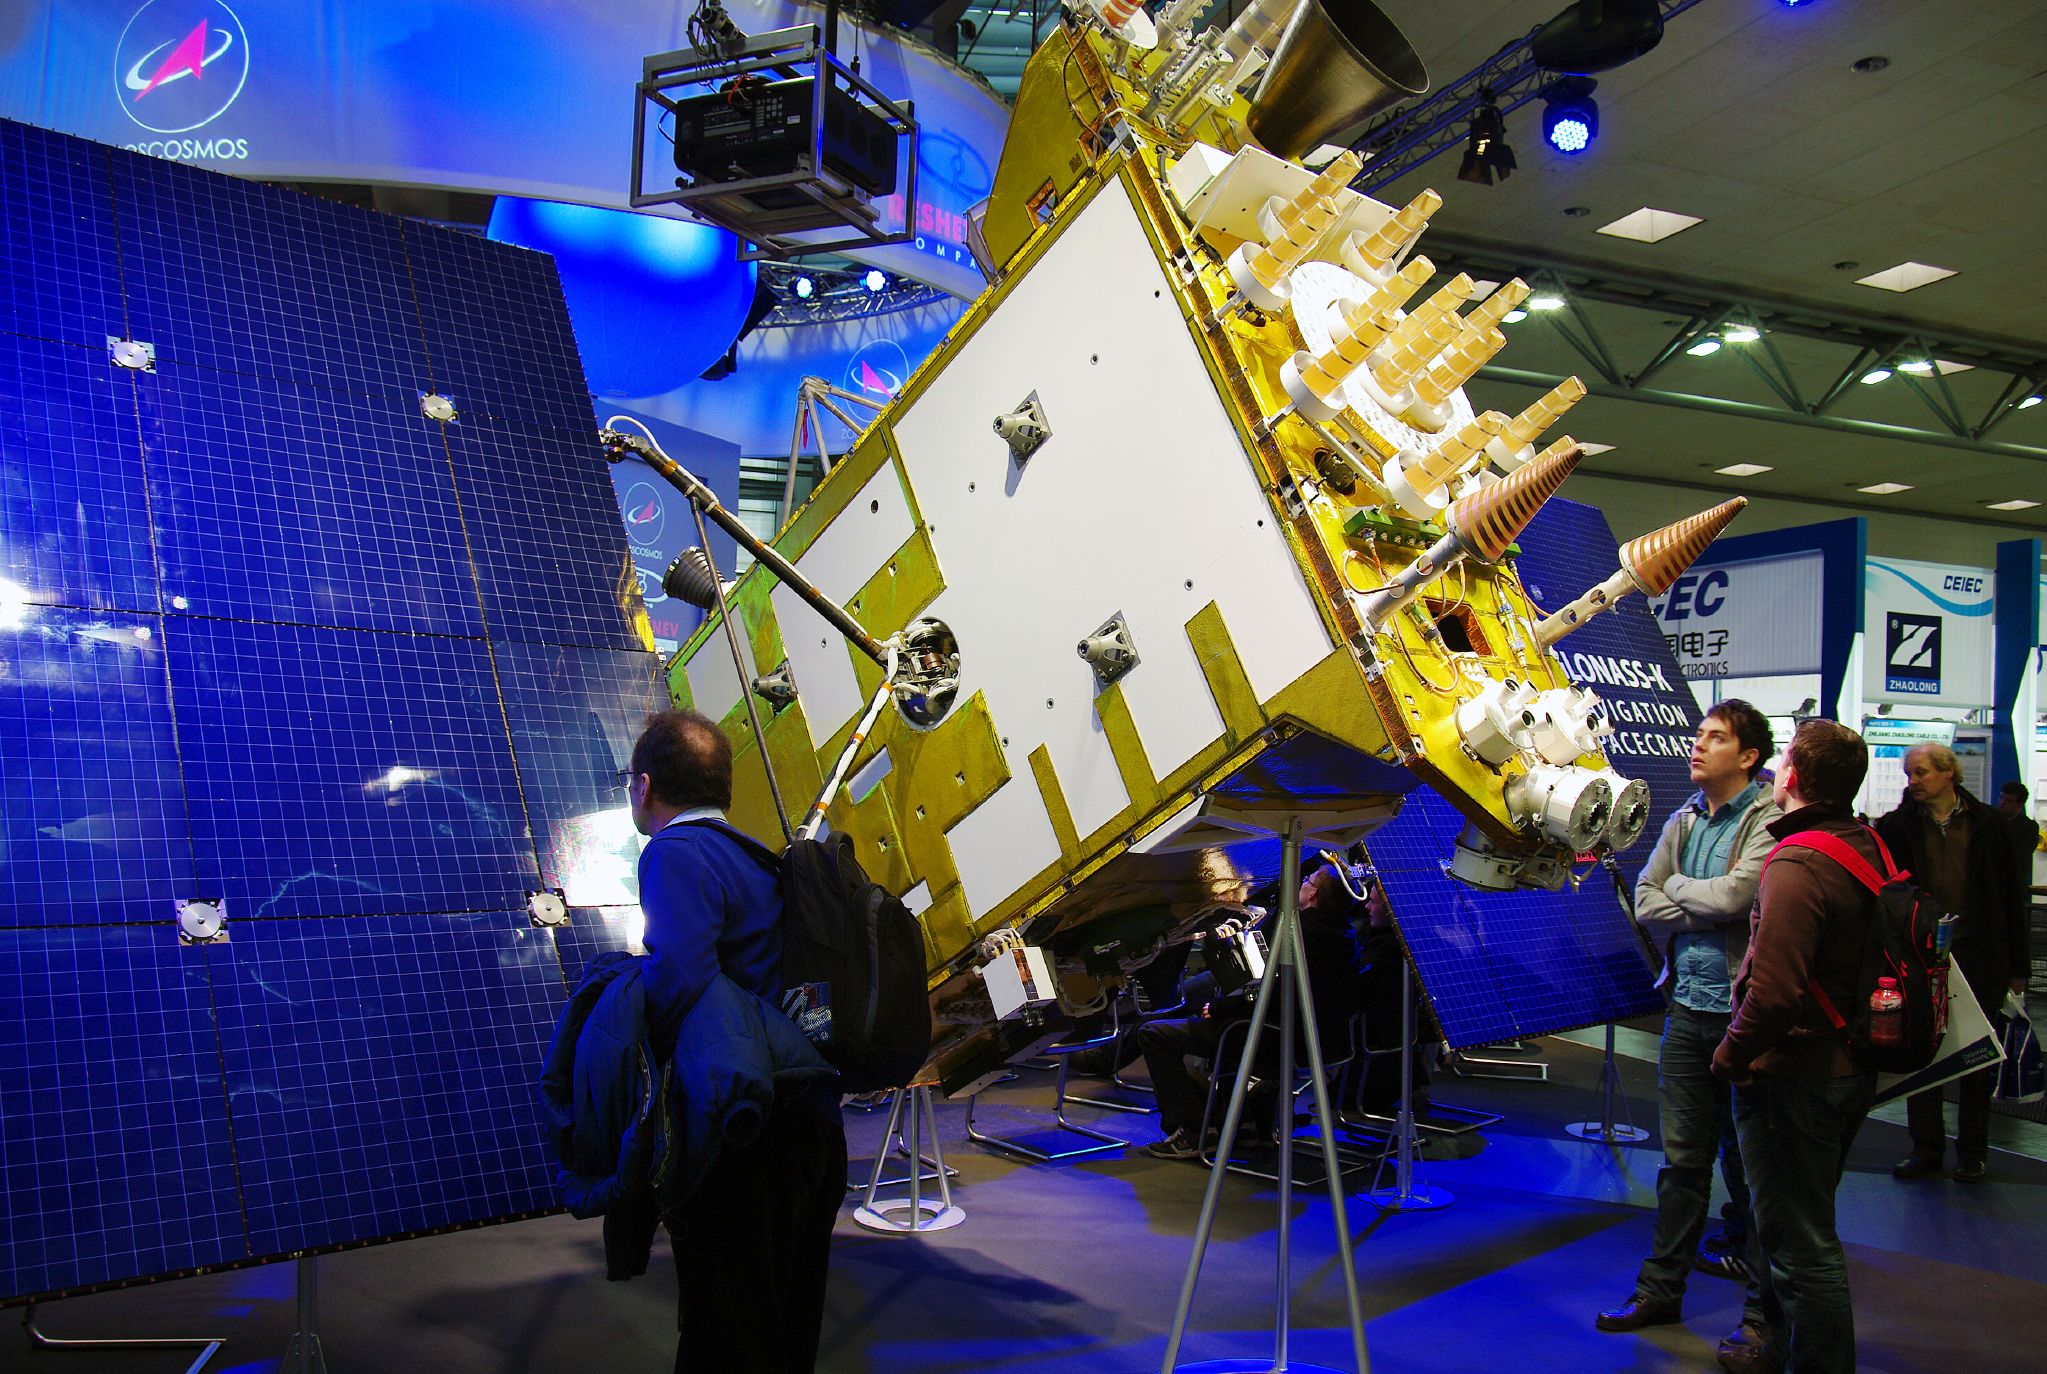 A Glonassz-K1-es műhold makettje <br>(foró: wikimedia.org)